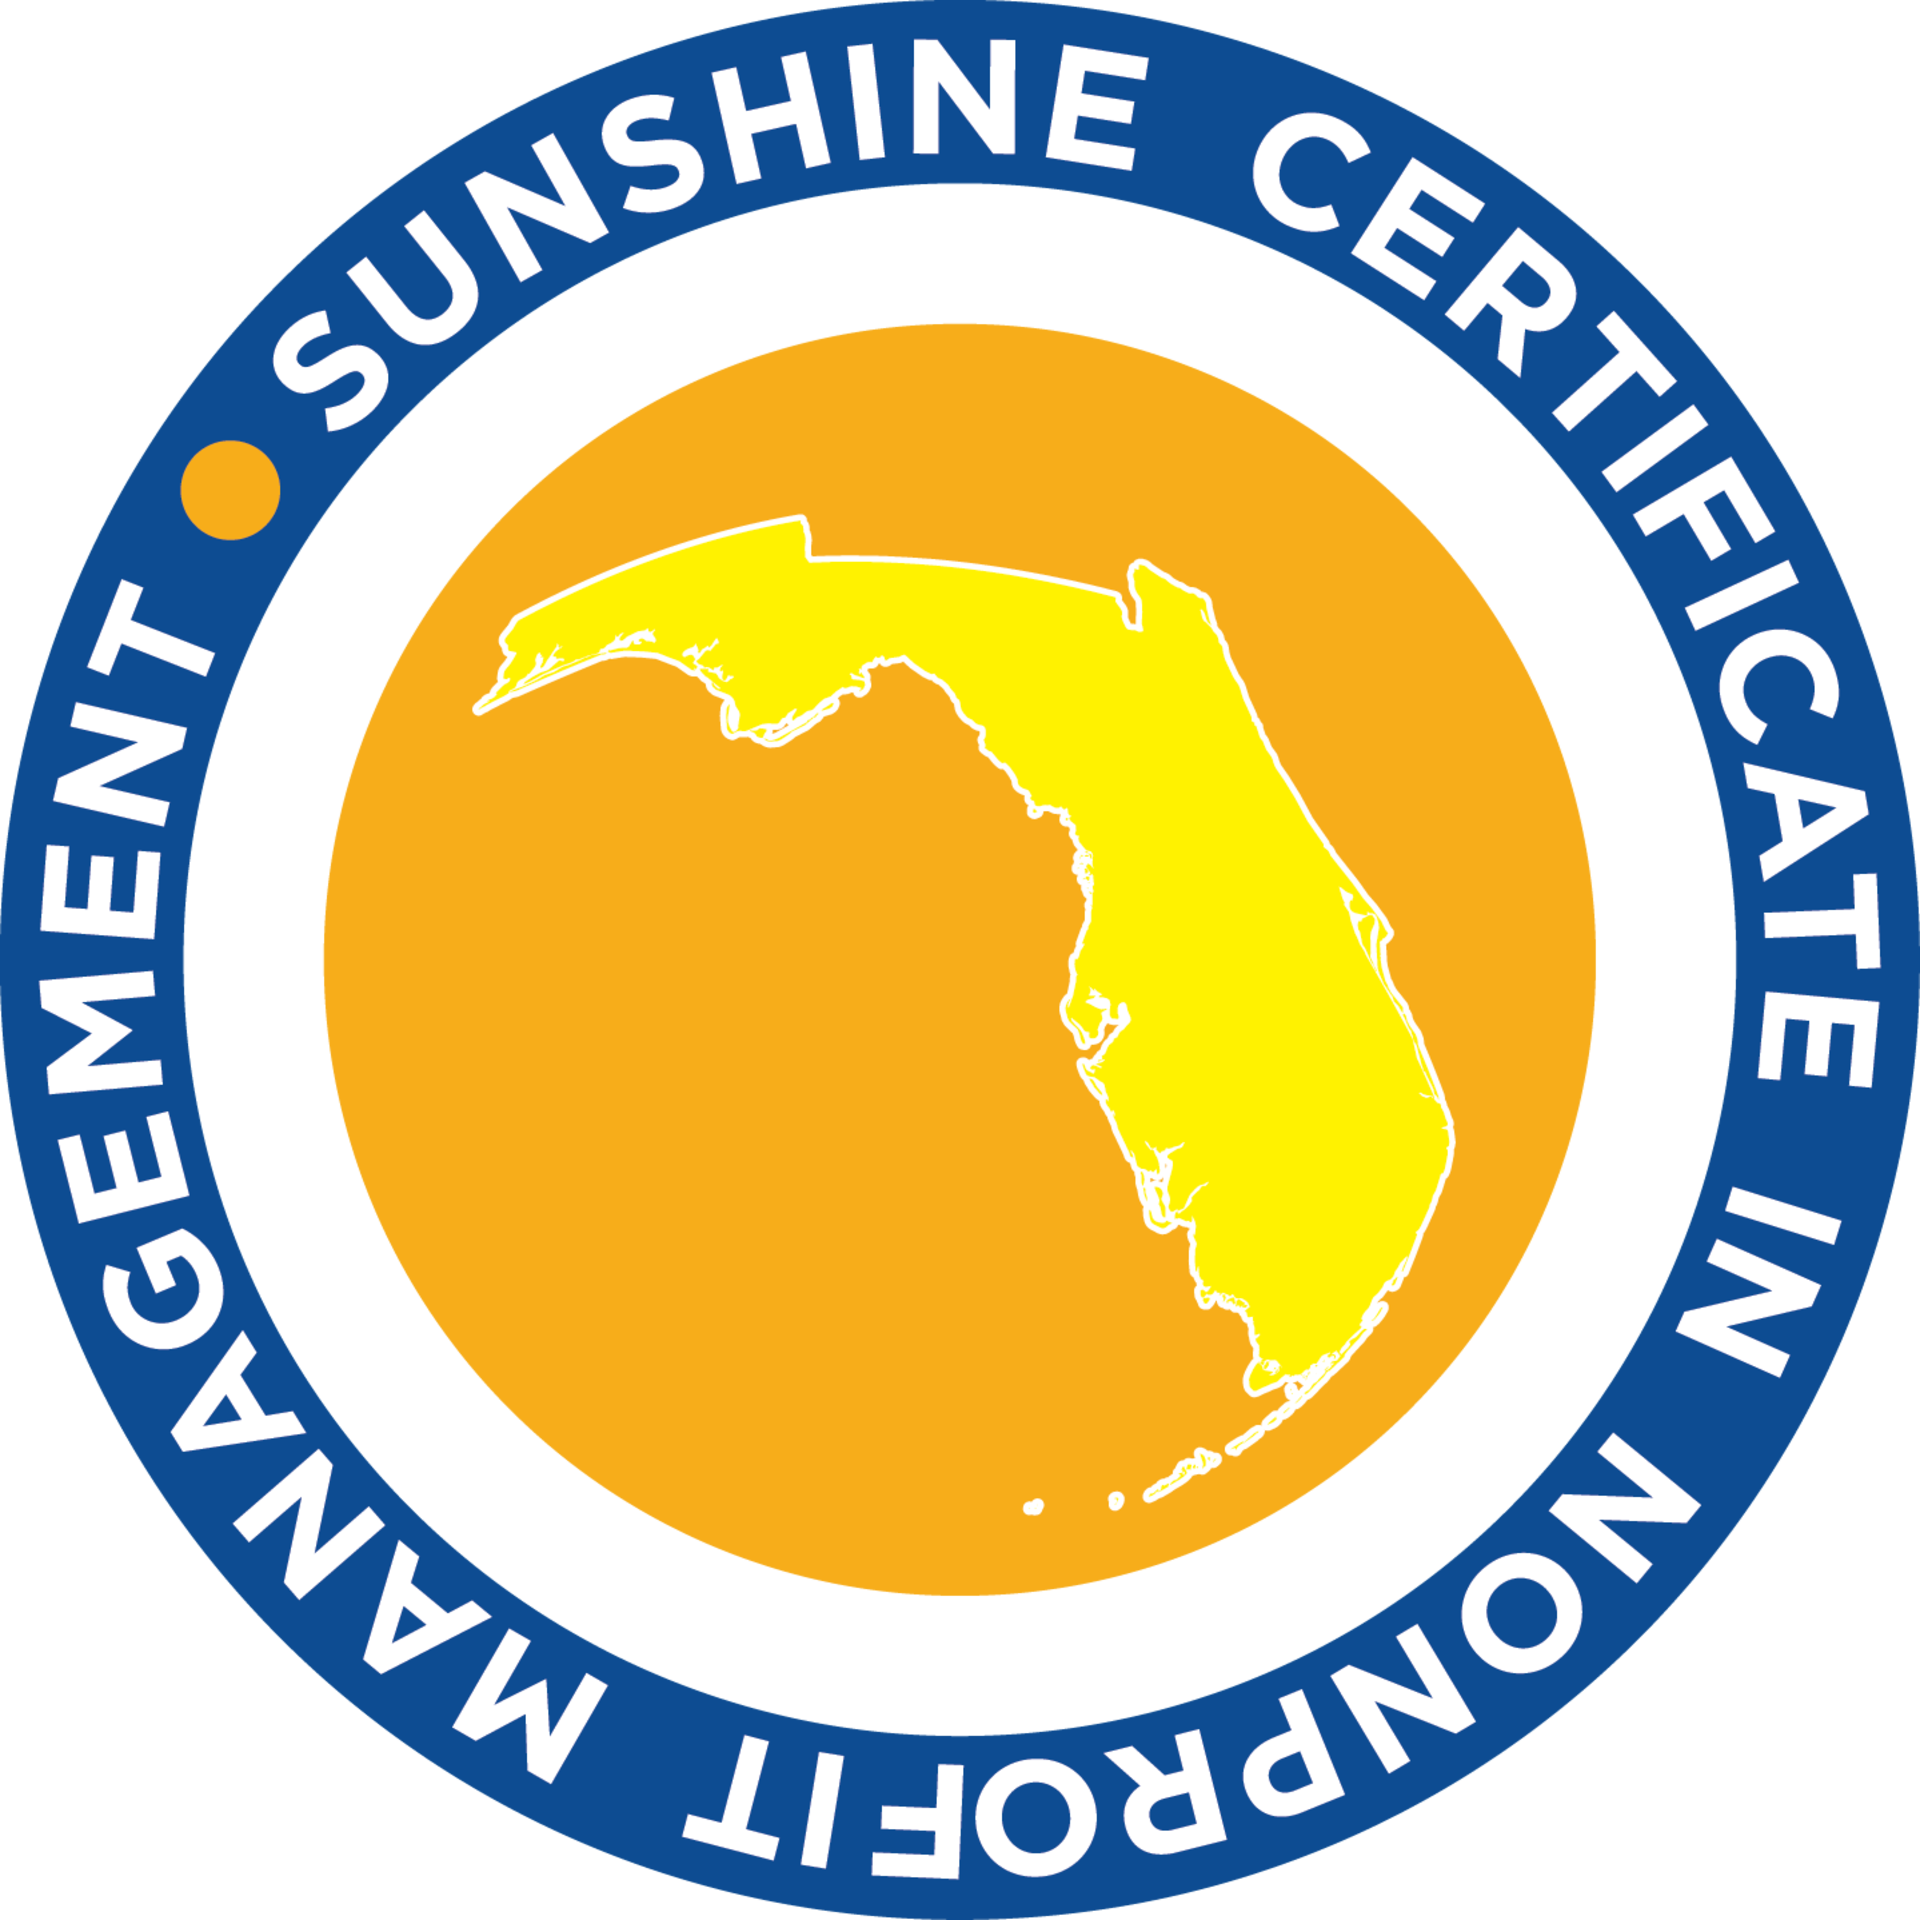  Florida Nonprofits’ Grantwriting Class of the Sunshine Certificate in...